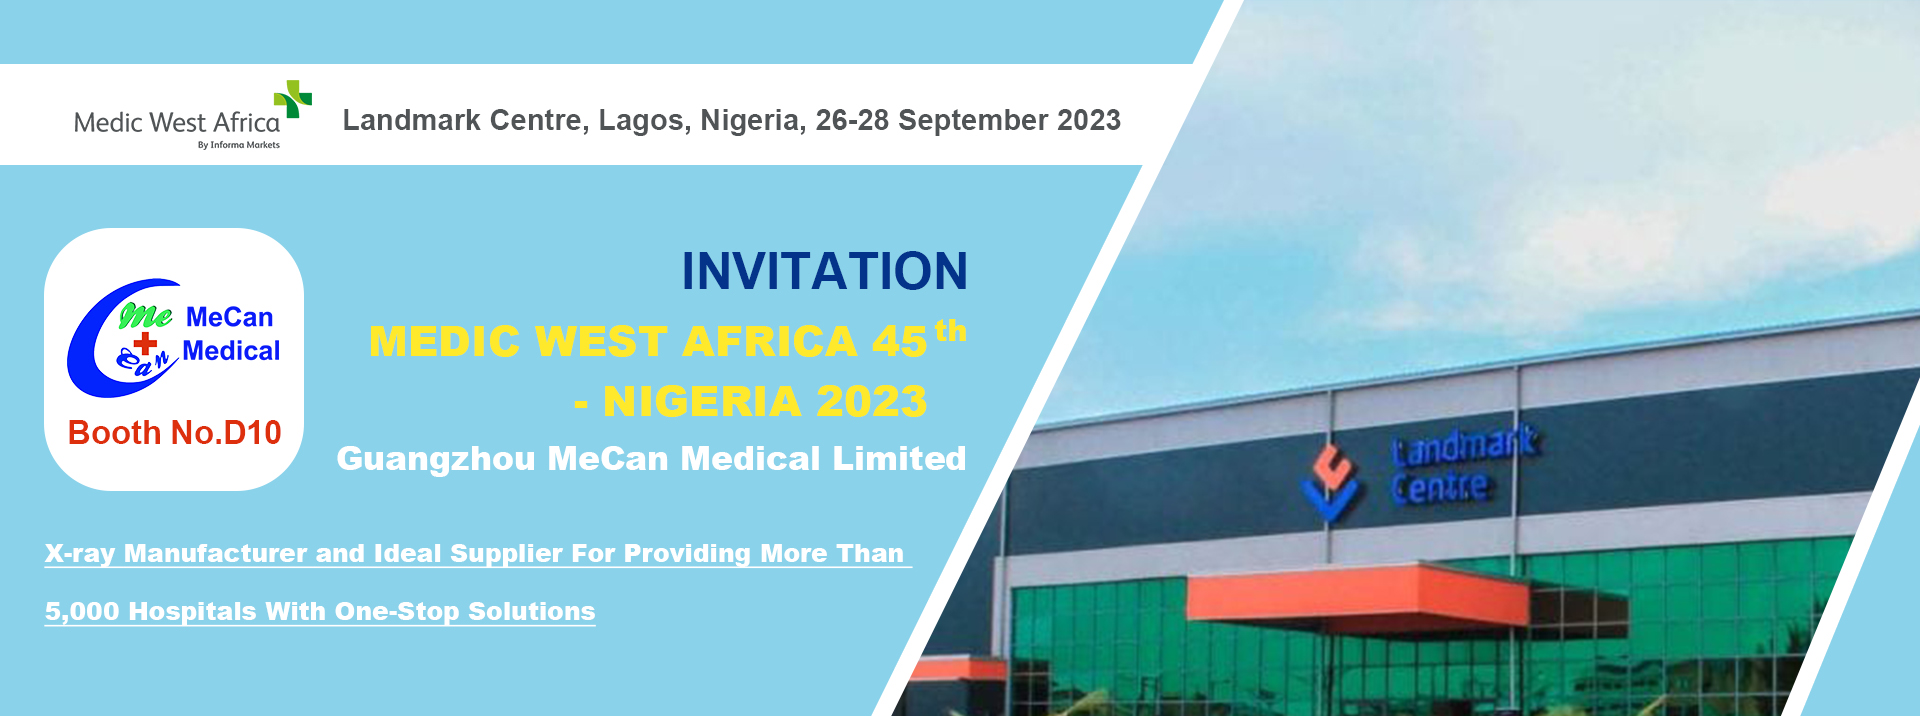 MeCan Medical en Medic West Africa 45th en Nixeria